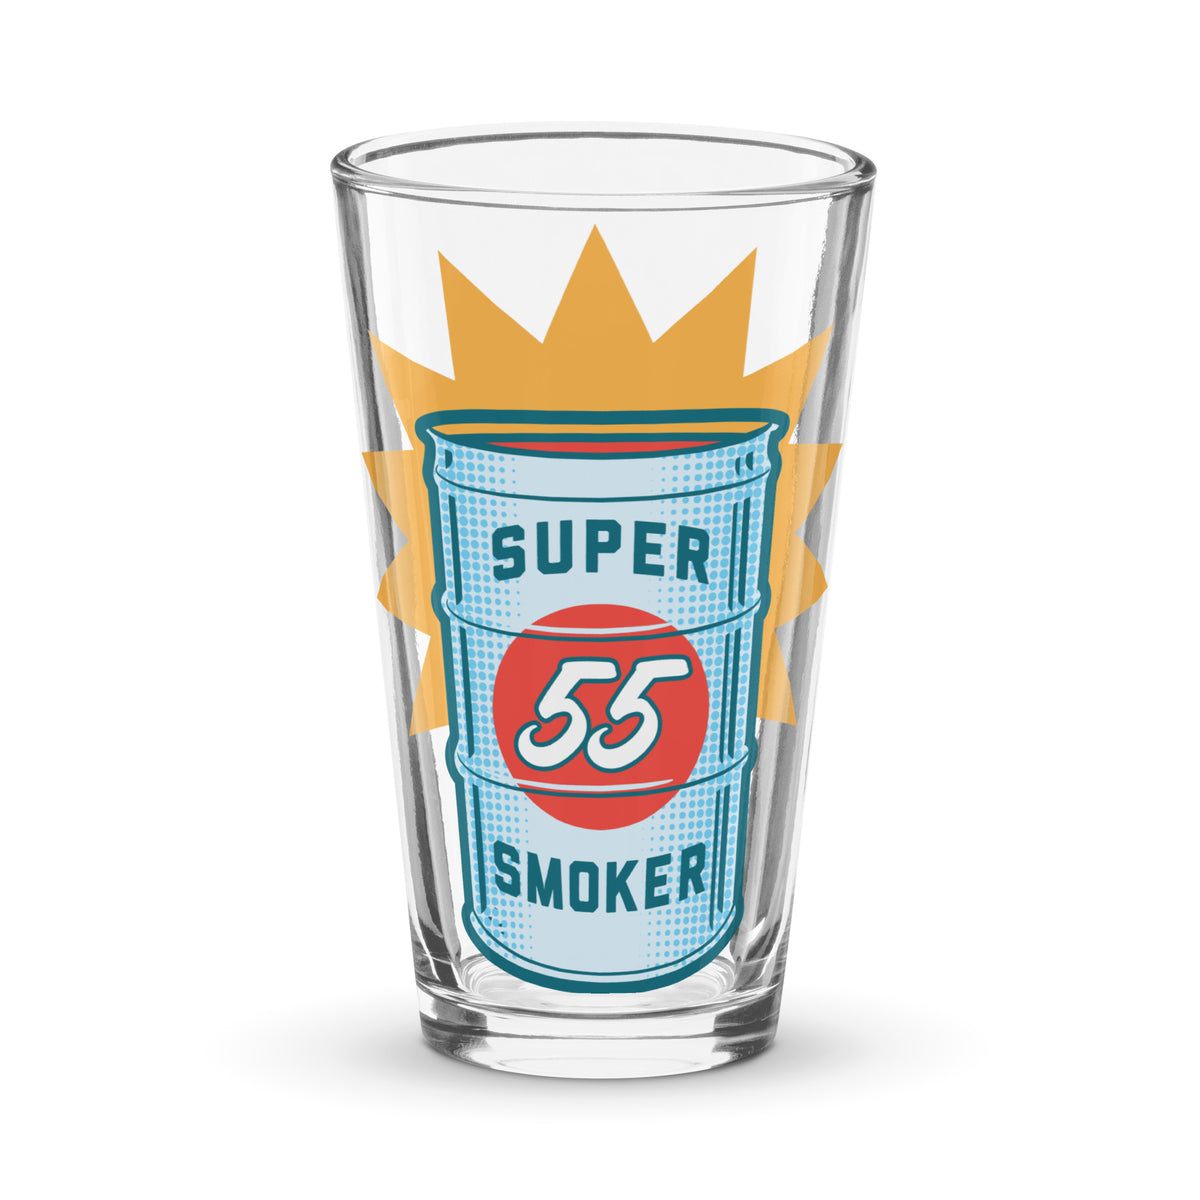 Super55 Barrel Shaker pint glass